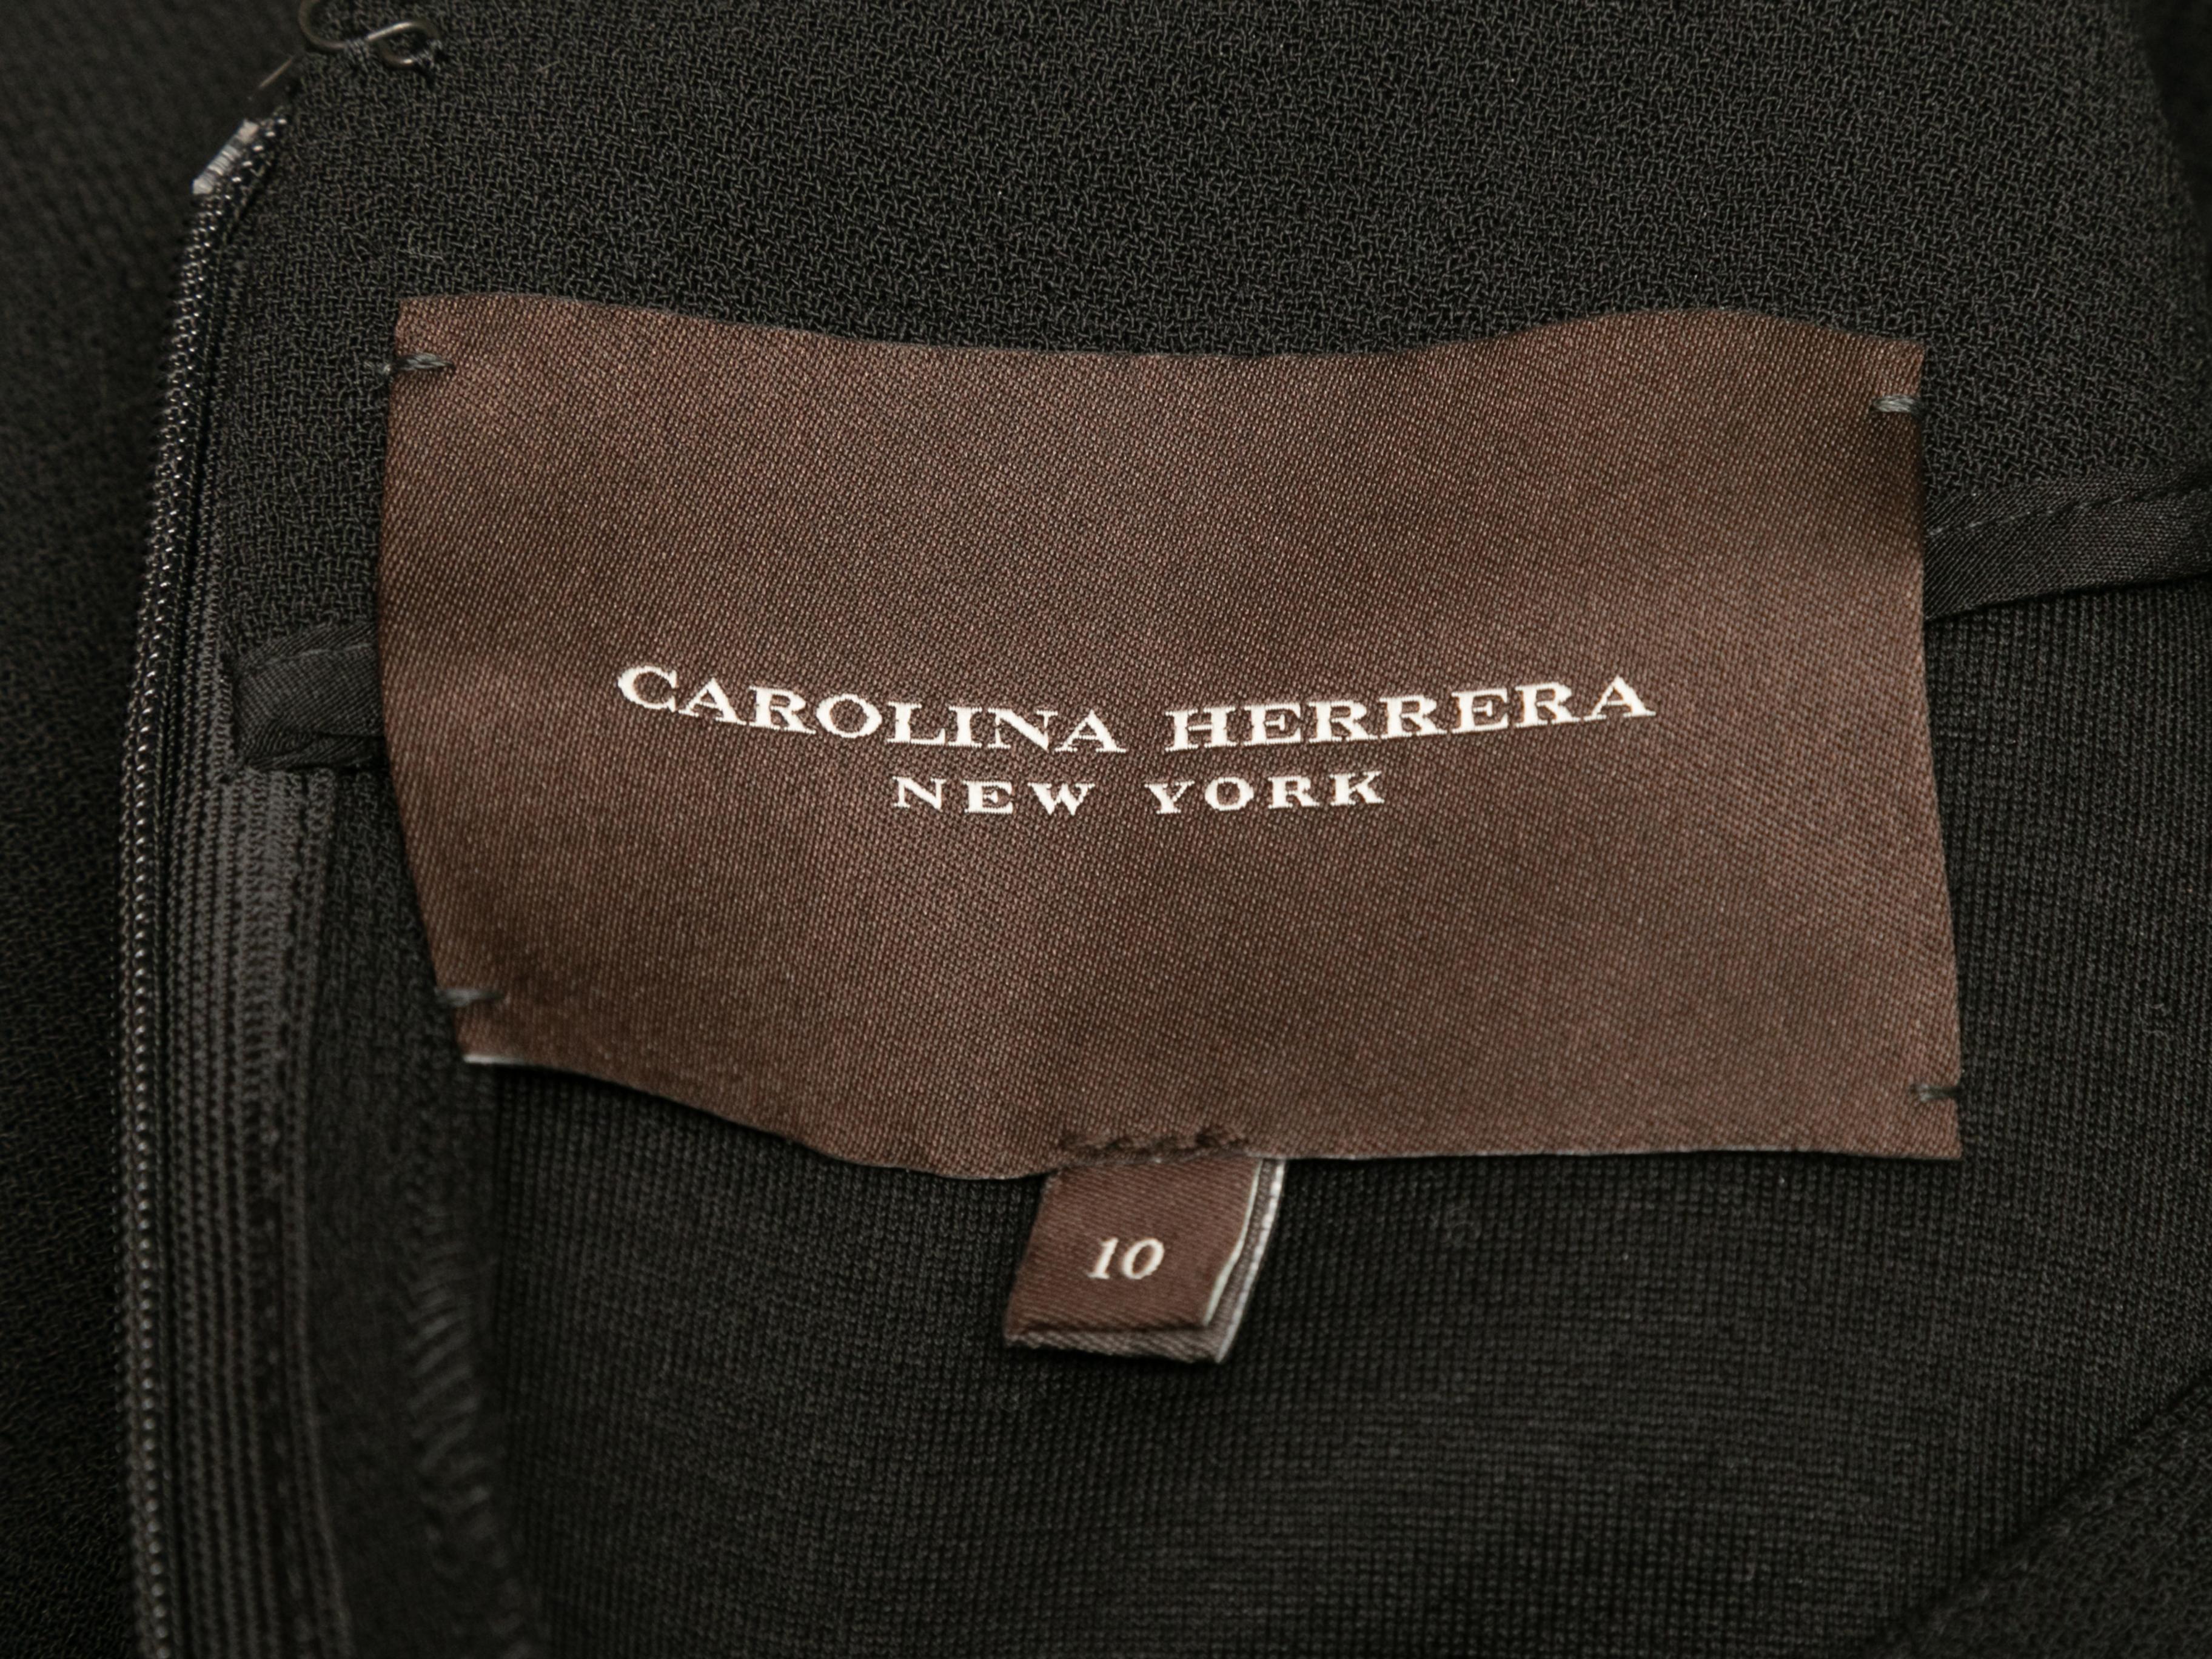 Black Carolina Herrera Virgin Wool Dress Size US 10 For Sale 1